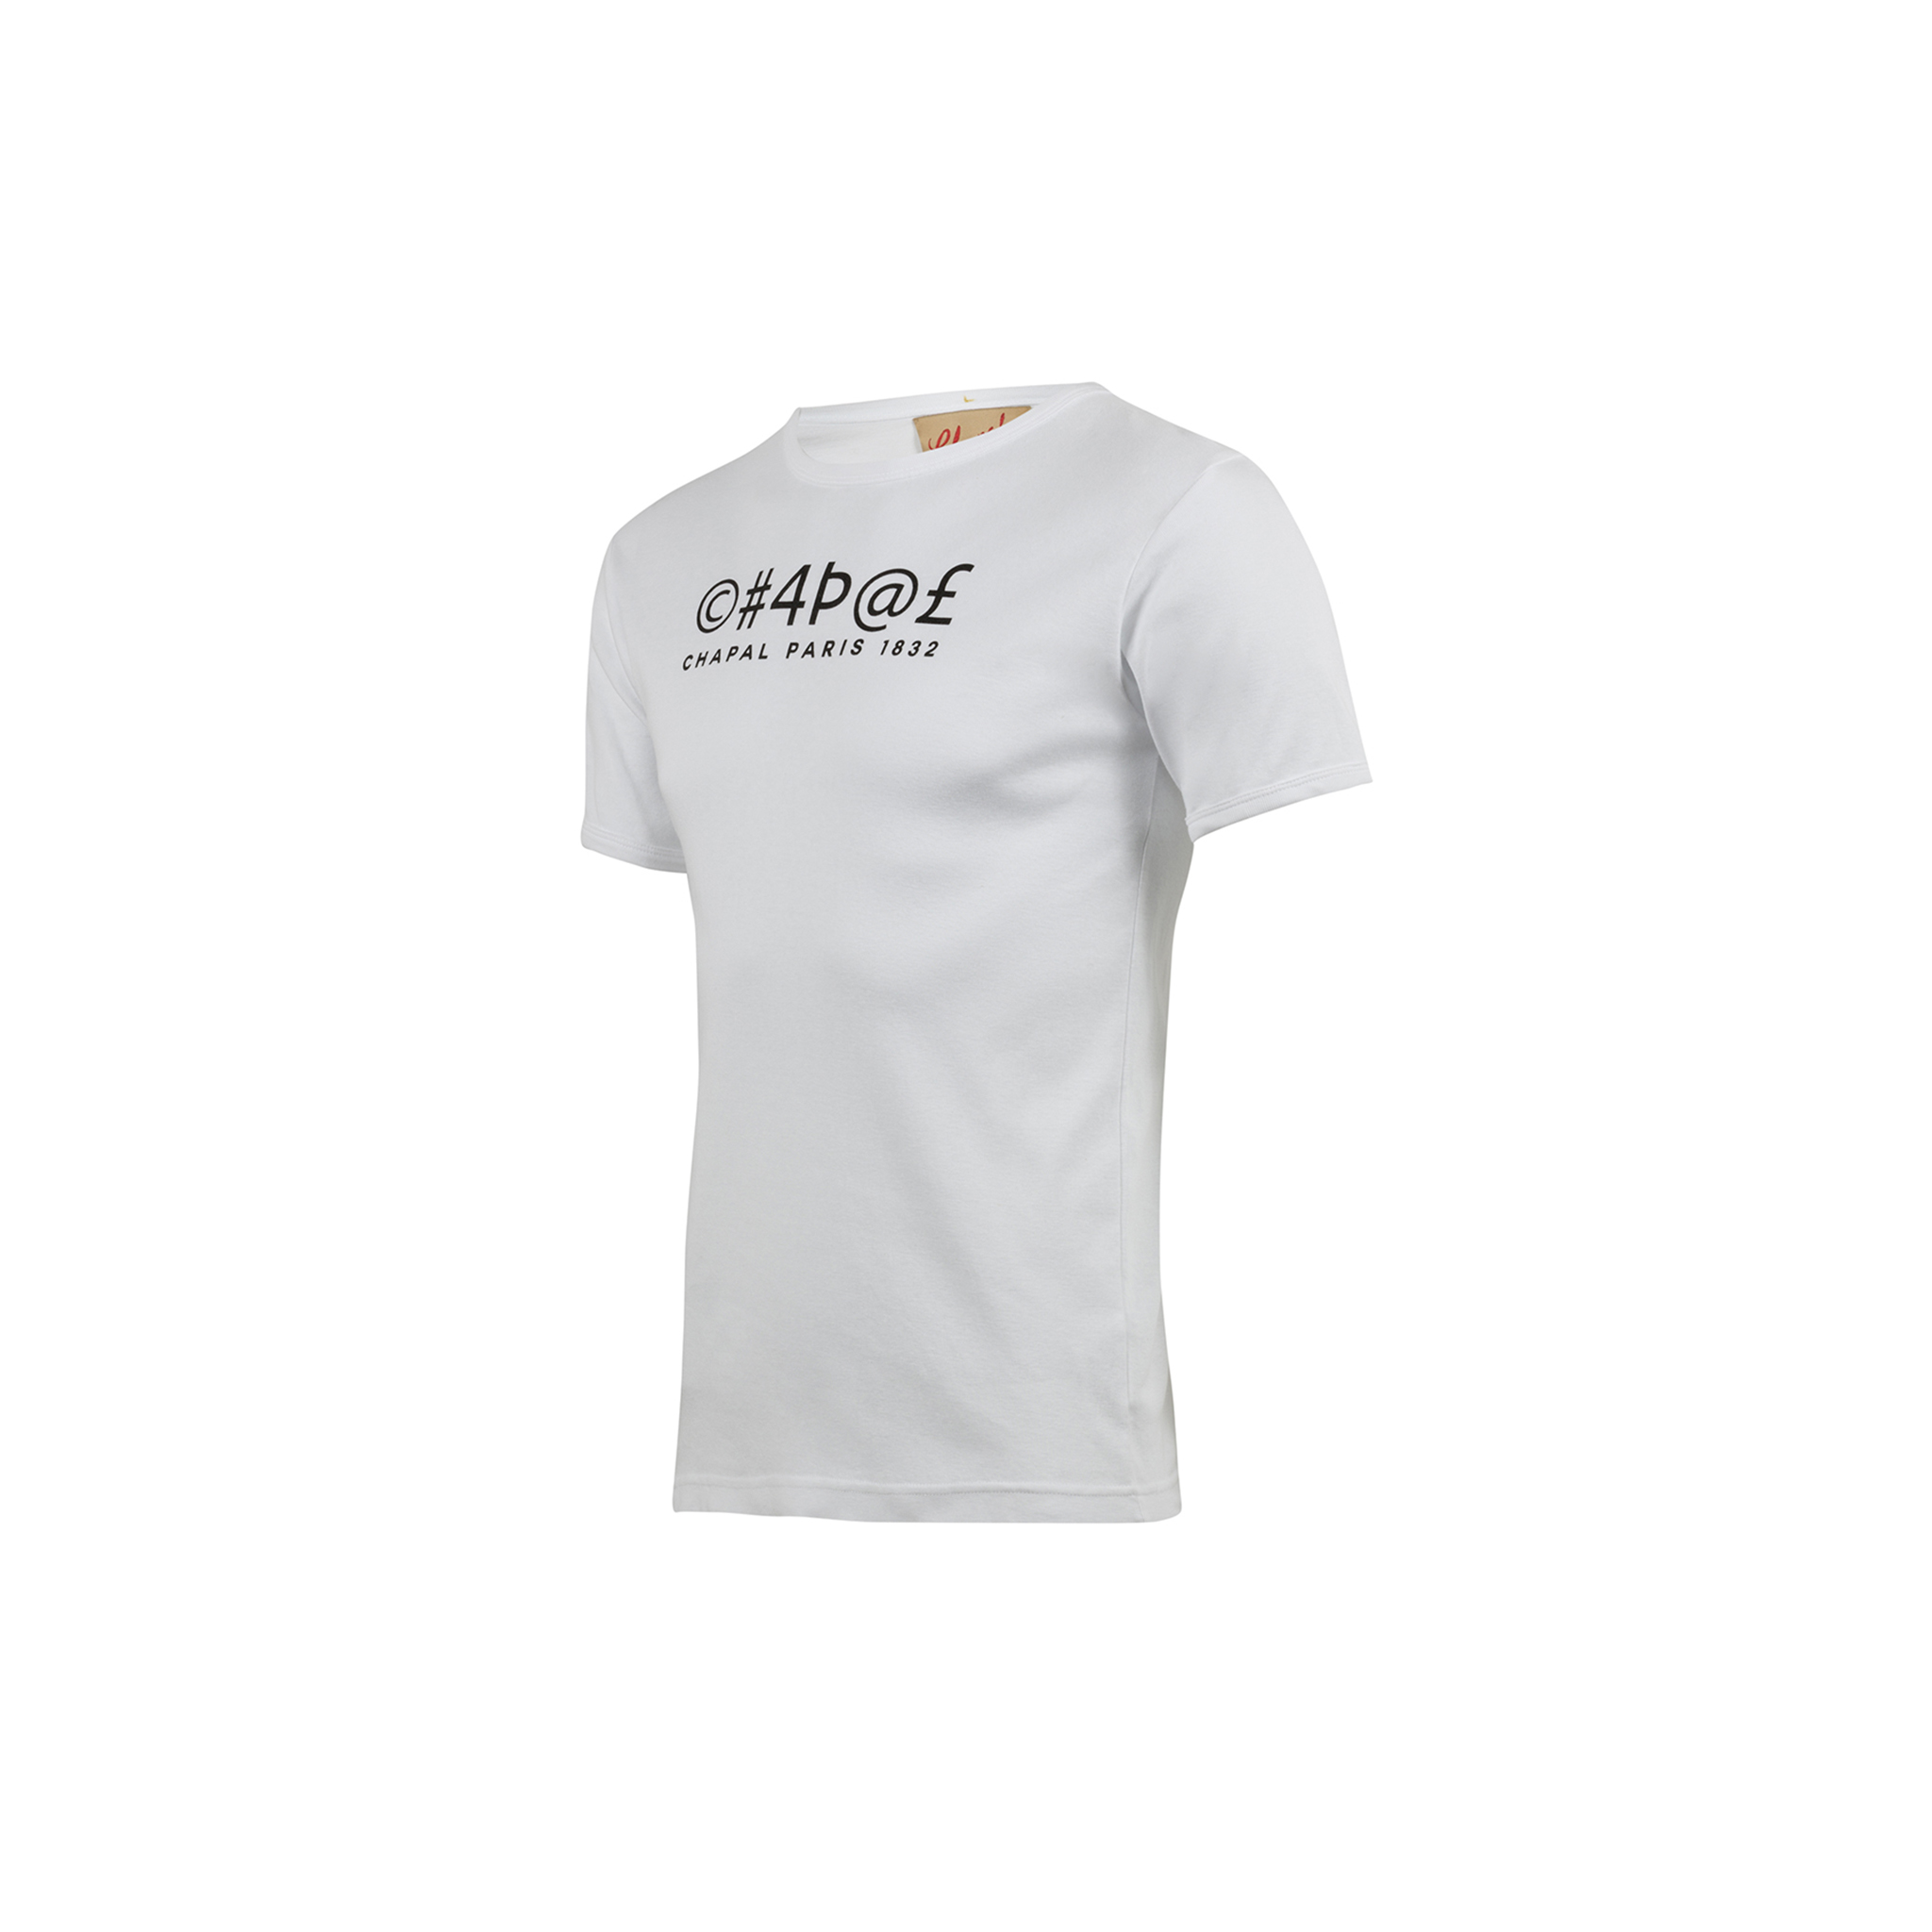 T-shirt Code - Cotton jersey - White color